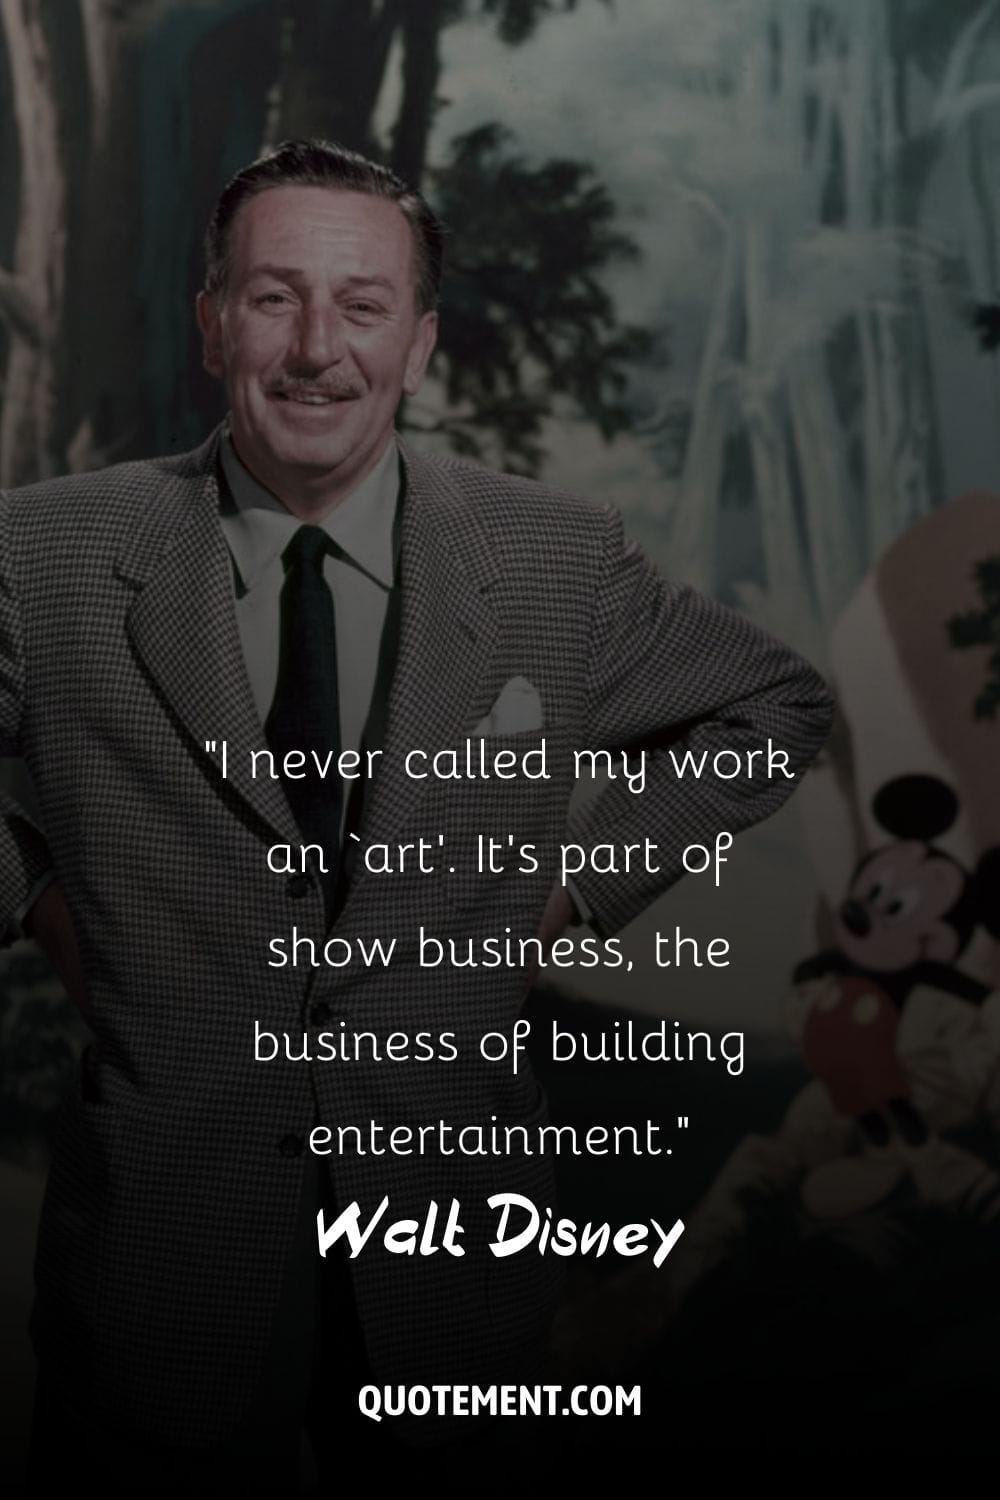 Walt Disney's radiant smile graces the frame.